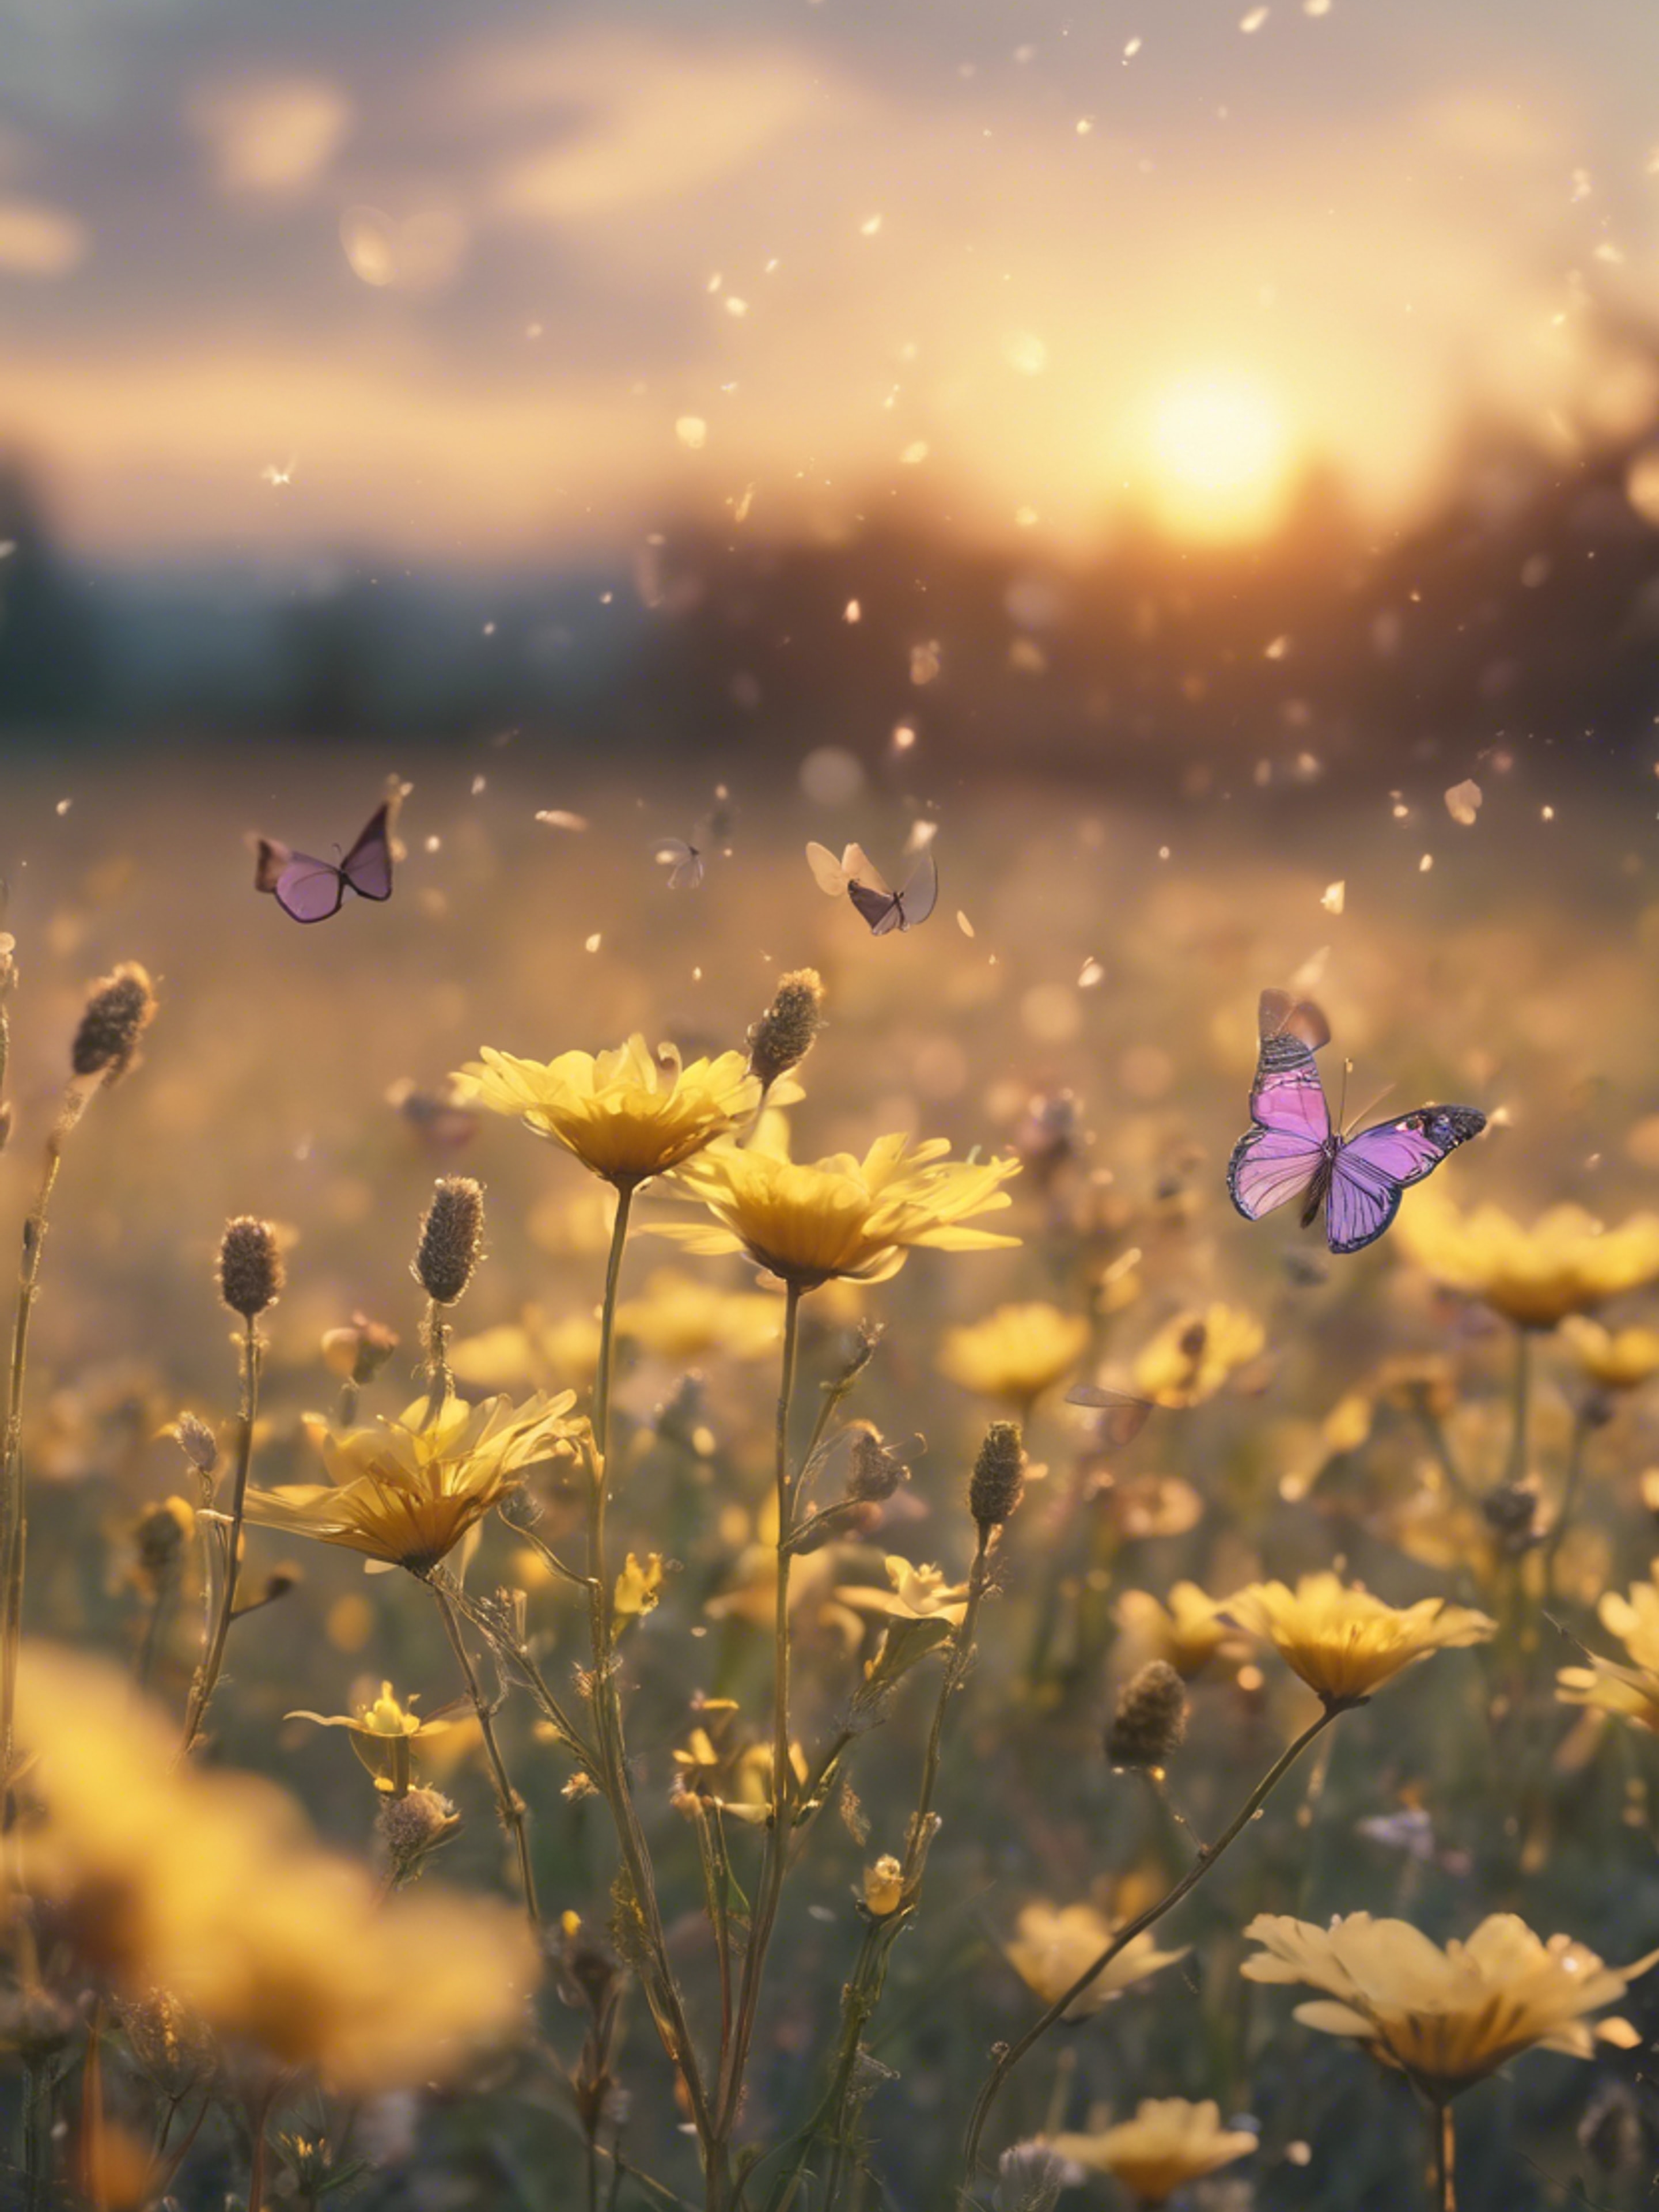 Sunset scene overlooking a meadow filled with pastel yellow flowers and kawaii butterflies fluttering above them. ផ្ទាំង​រូបភាព[4de922e1f50d428d8d1a]